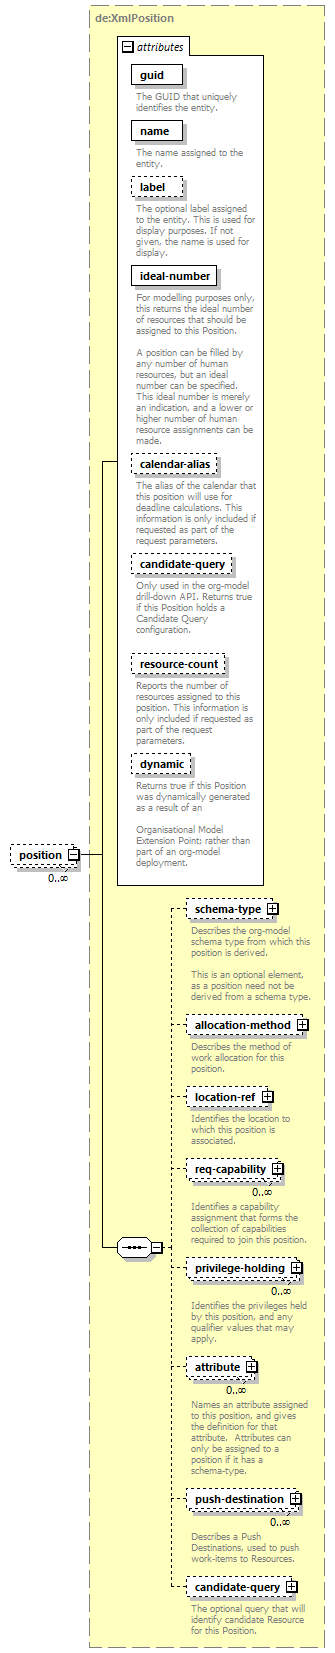 de-orgmodel-service_diagrams/de-orgmodel-service_p16.png